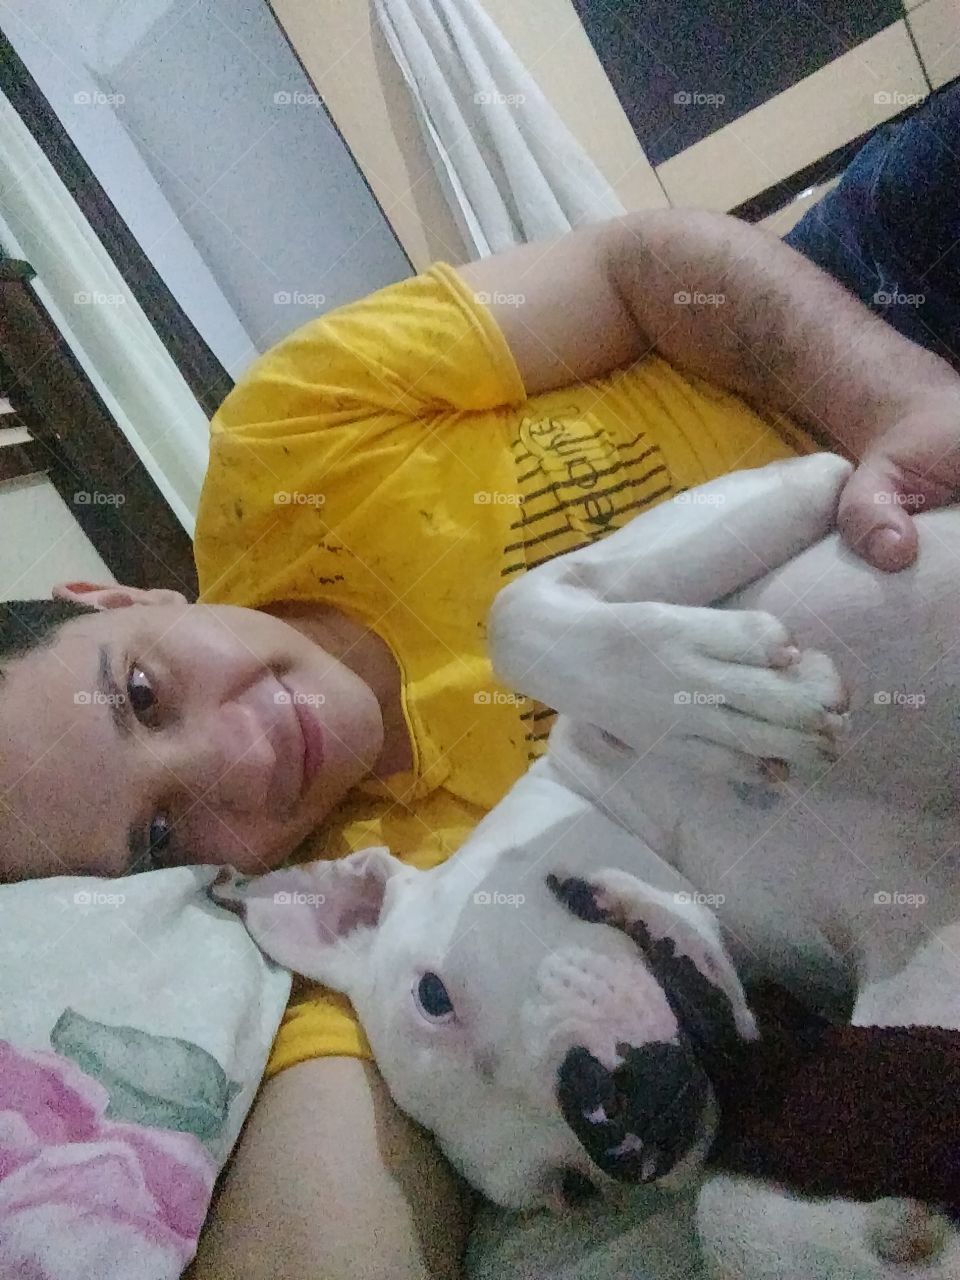 my pitbull and me